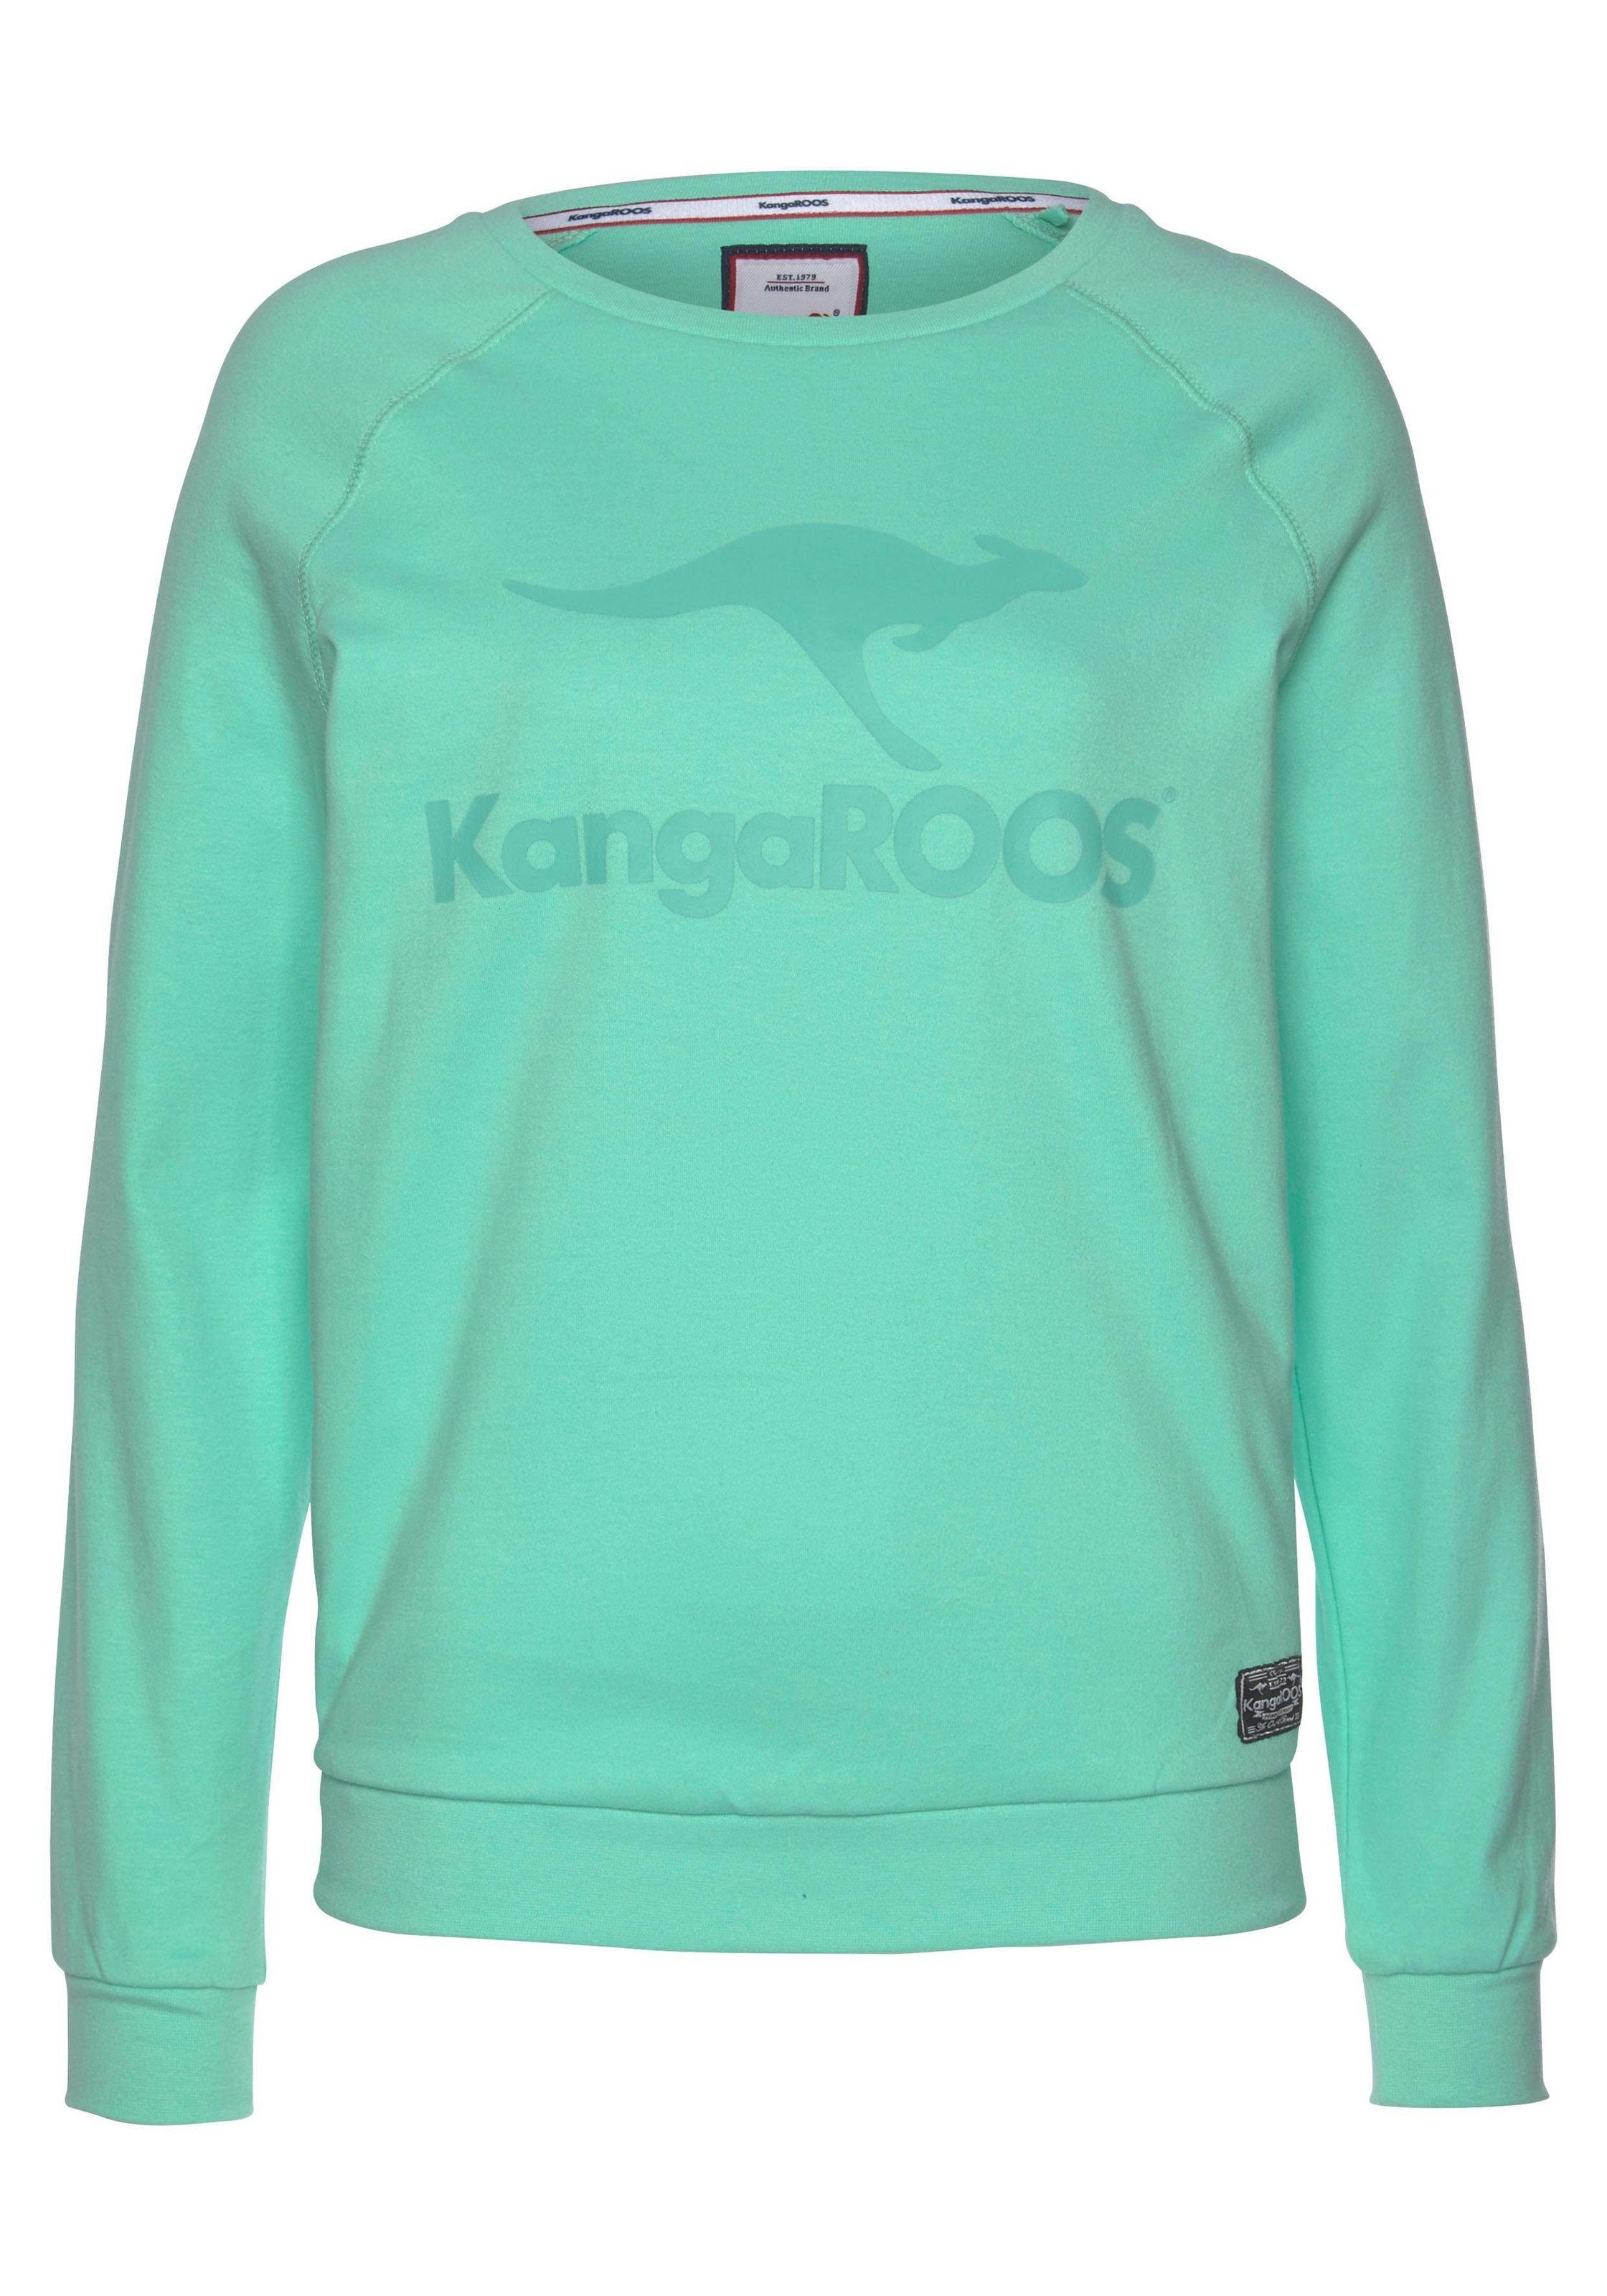 KangaROOS Sweater, online Label-Print vorne großem mit